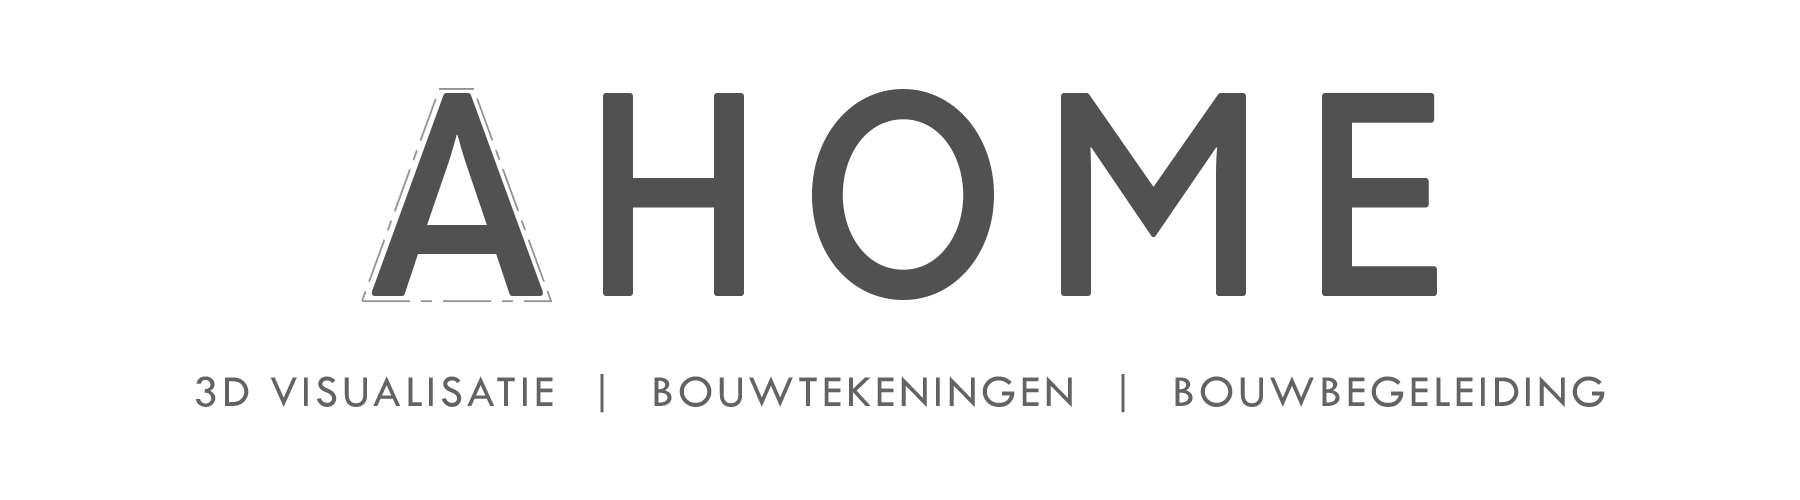 AHOME Logo